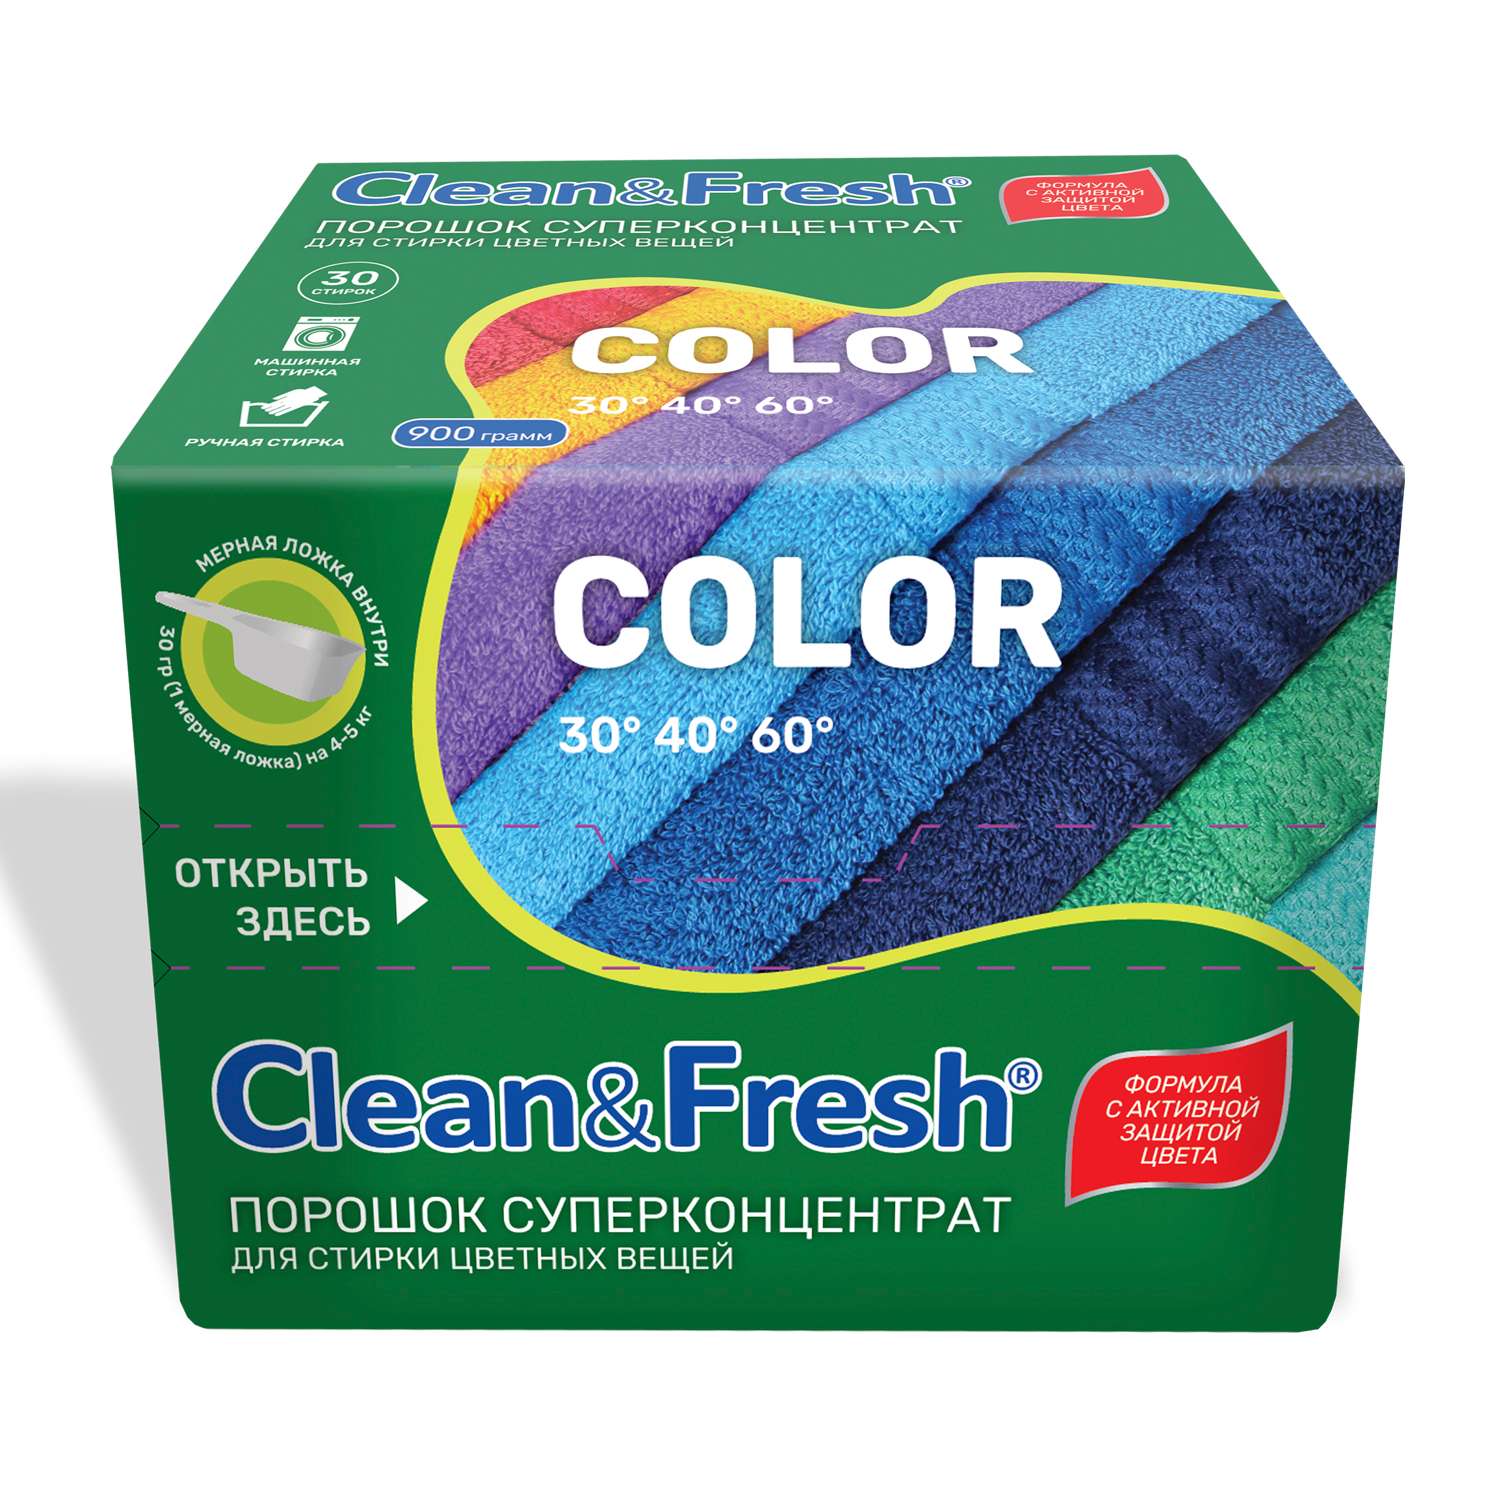 Порошок суперконцентрат Clean and Fresh для стирки цветных вещей 900 г - фото 1